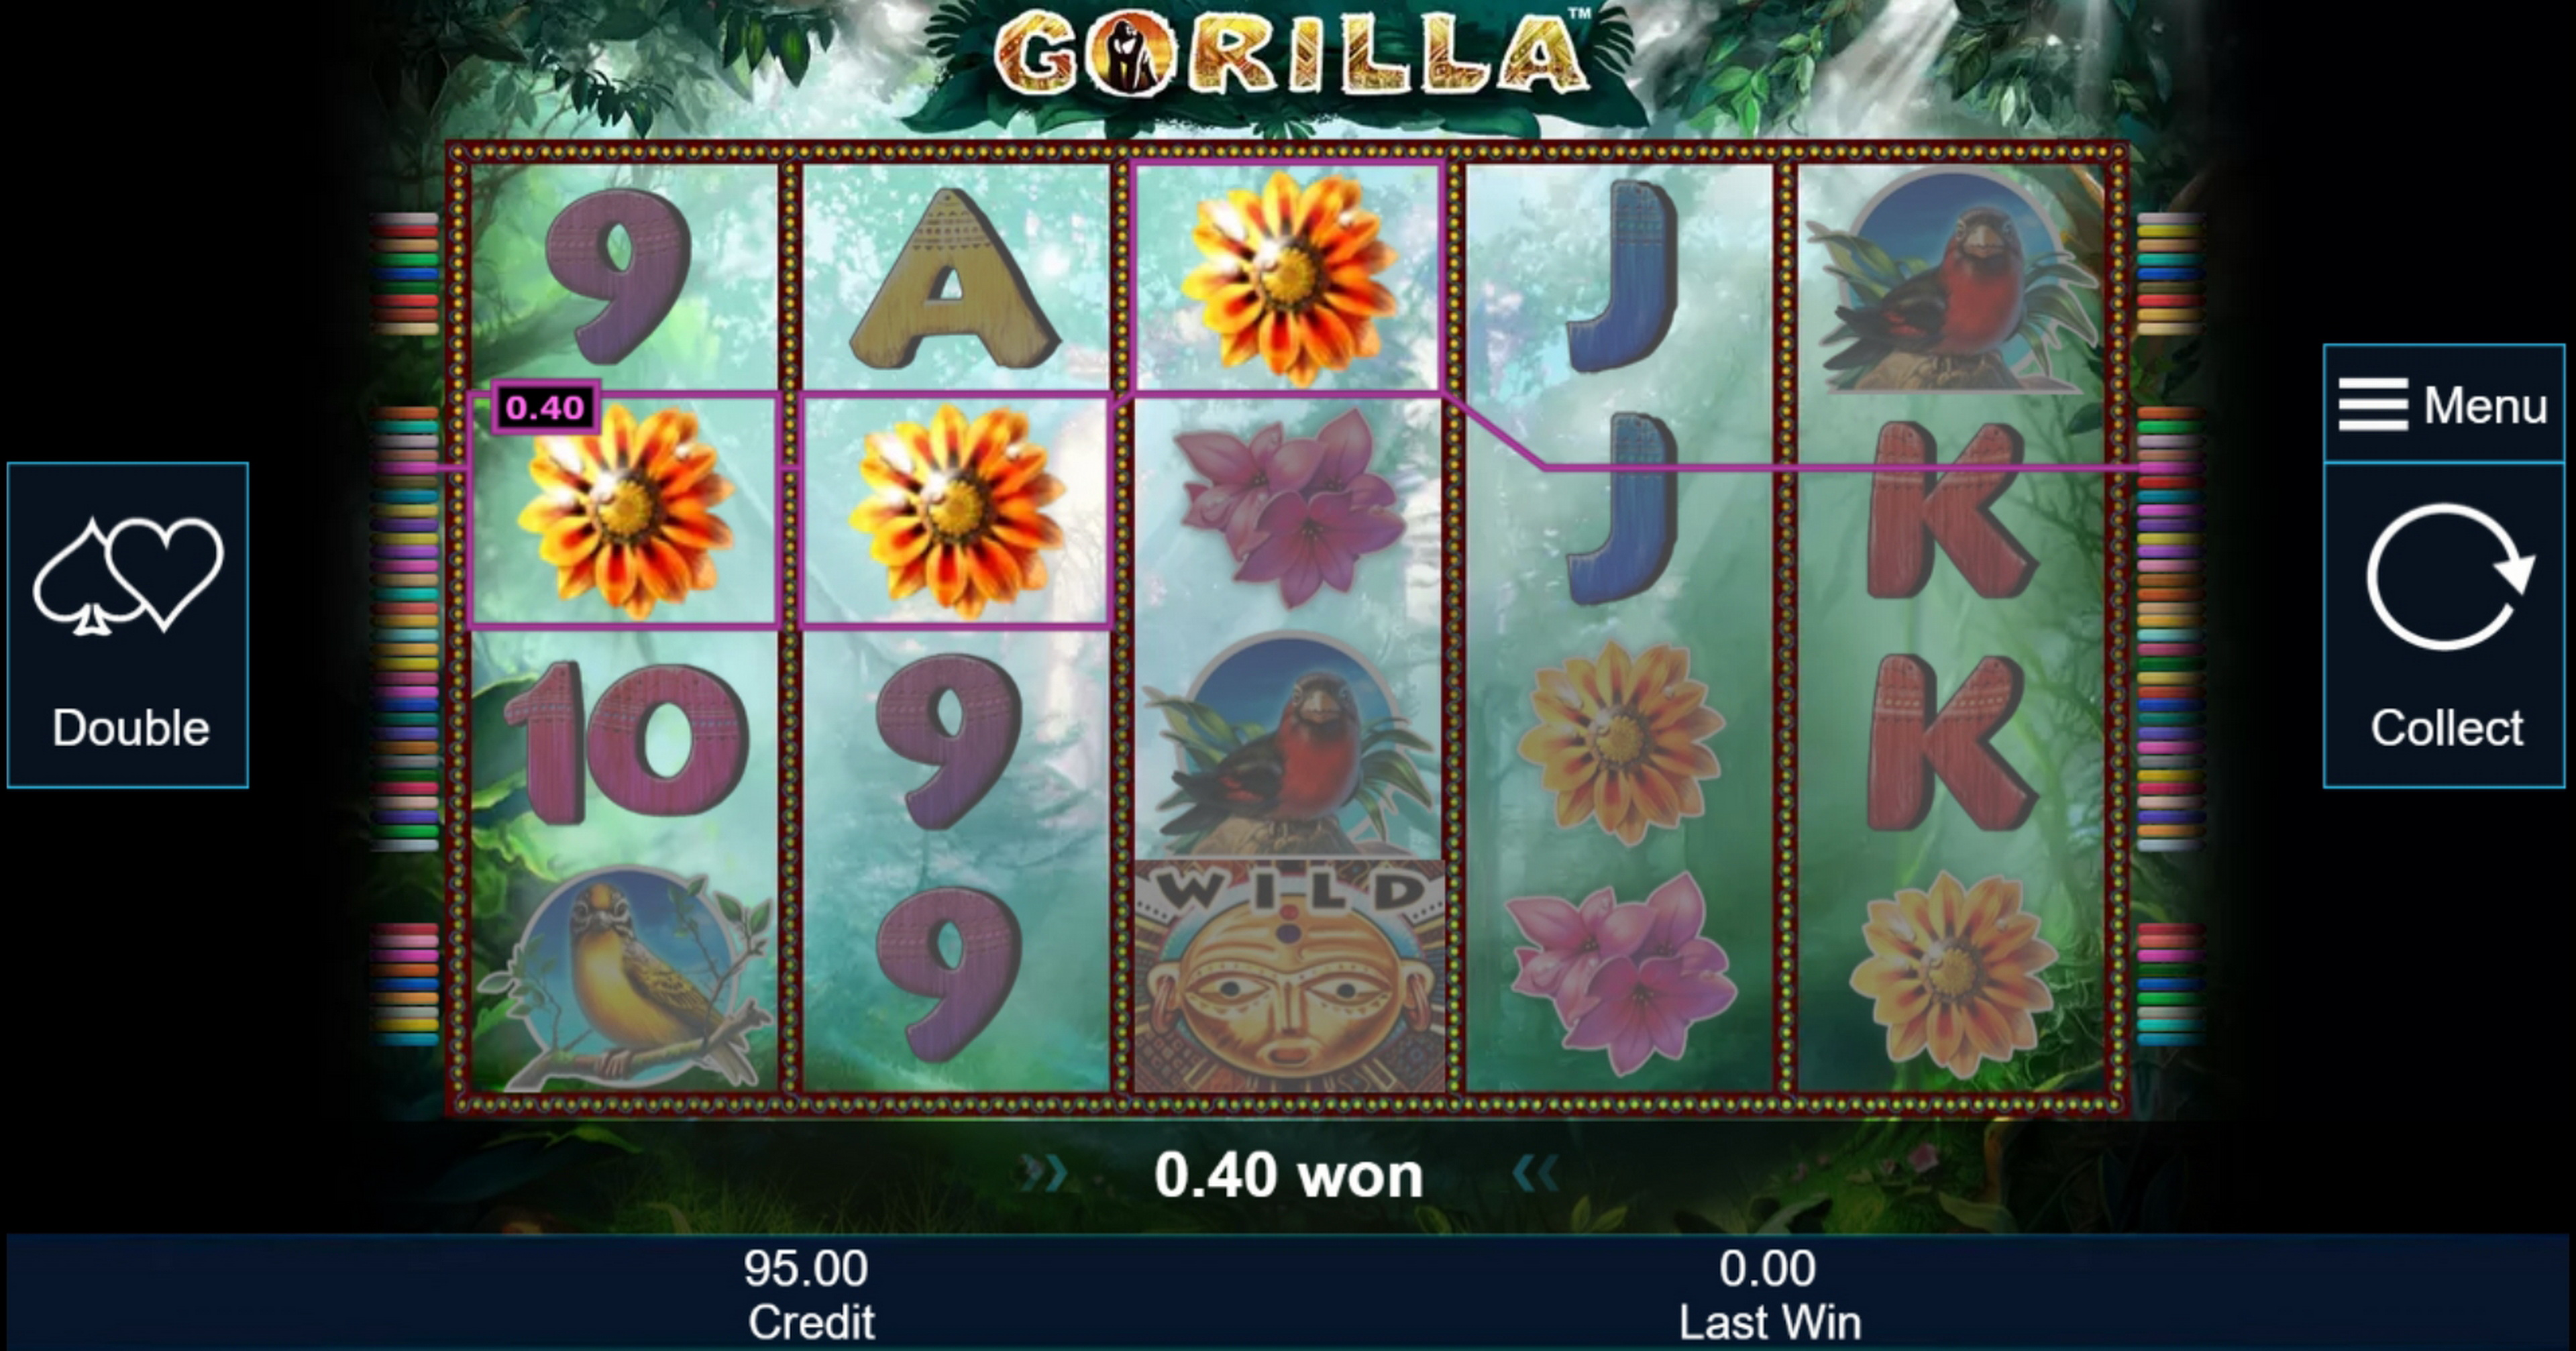 Win Money in Gorilla Free Slot Game by Greentube